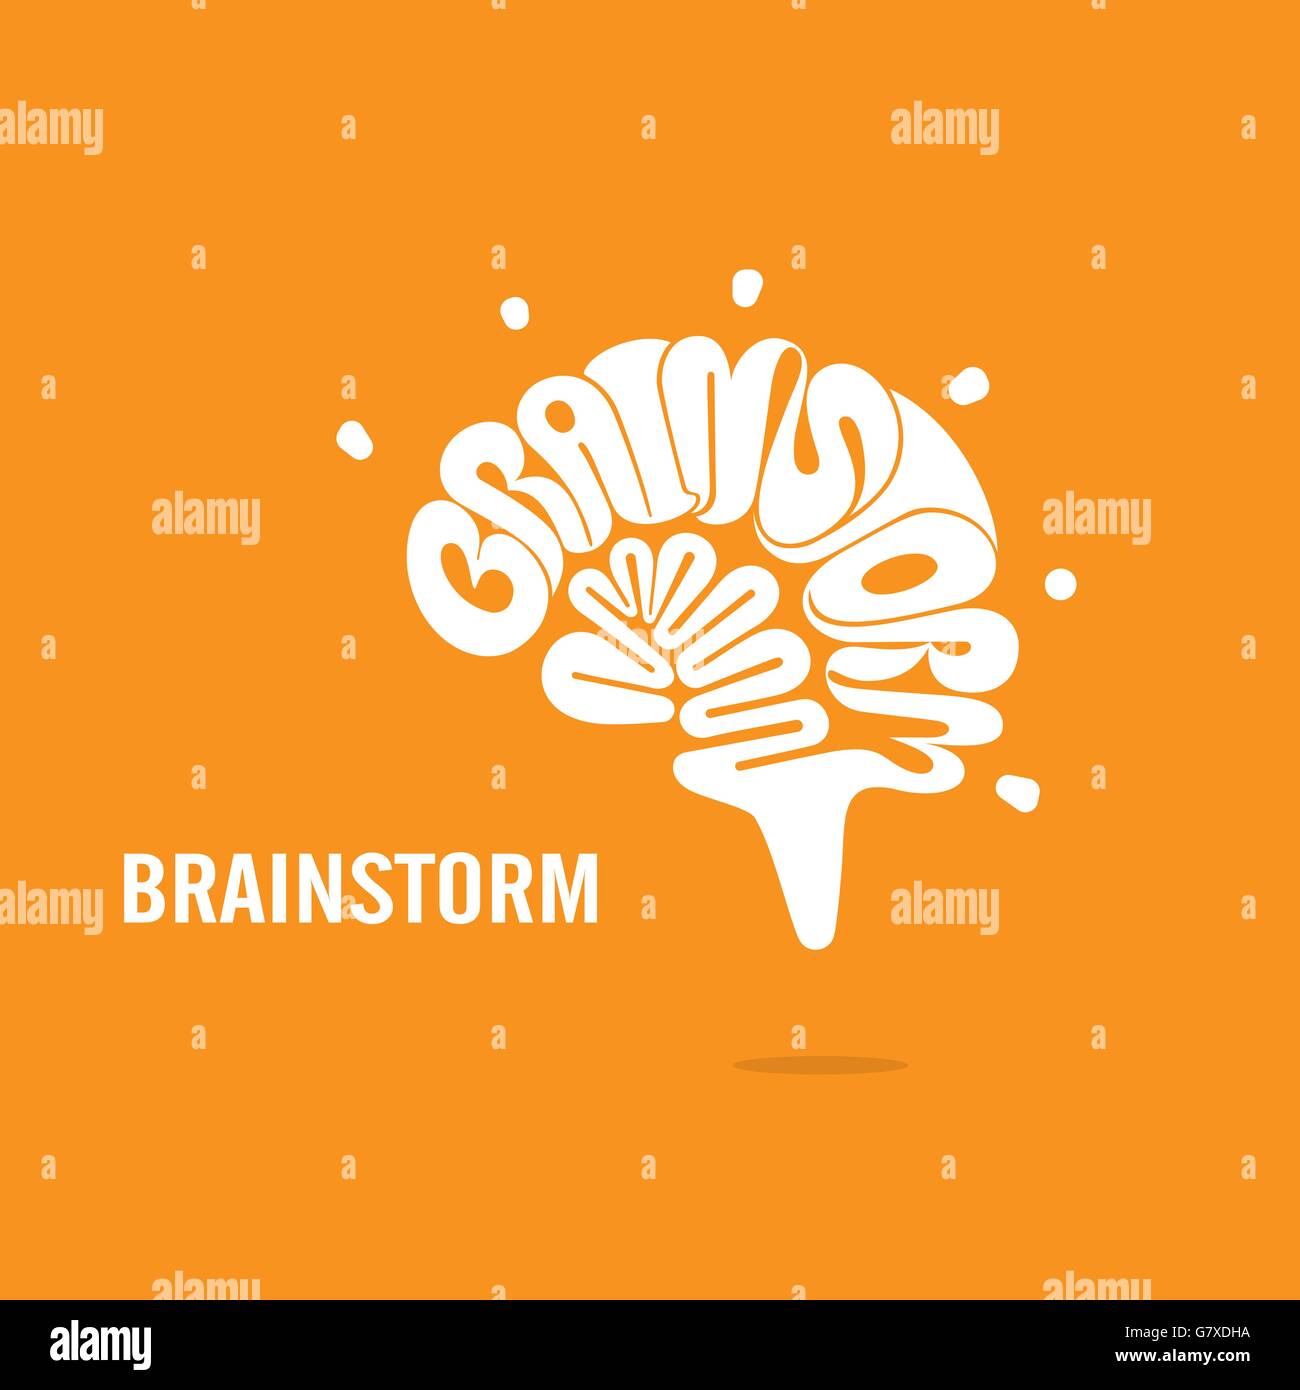 Creative Brain sign and Brainstorm concept.Brain logo vector design.Think Idea concept.Brainstorm Power Thinking Brain icon. Stock Vector